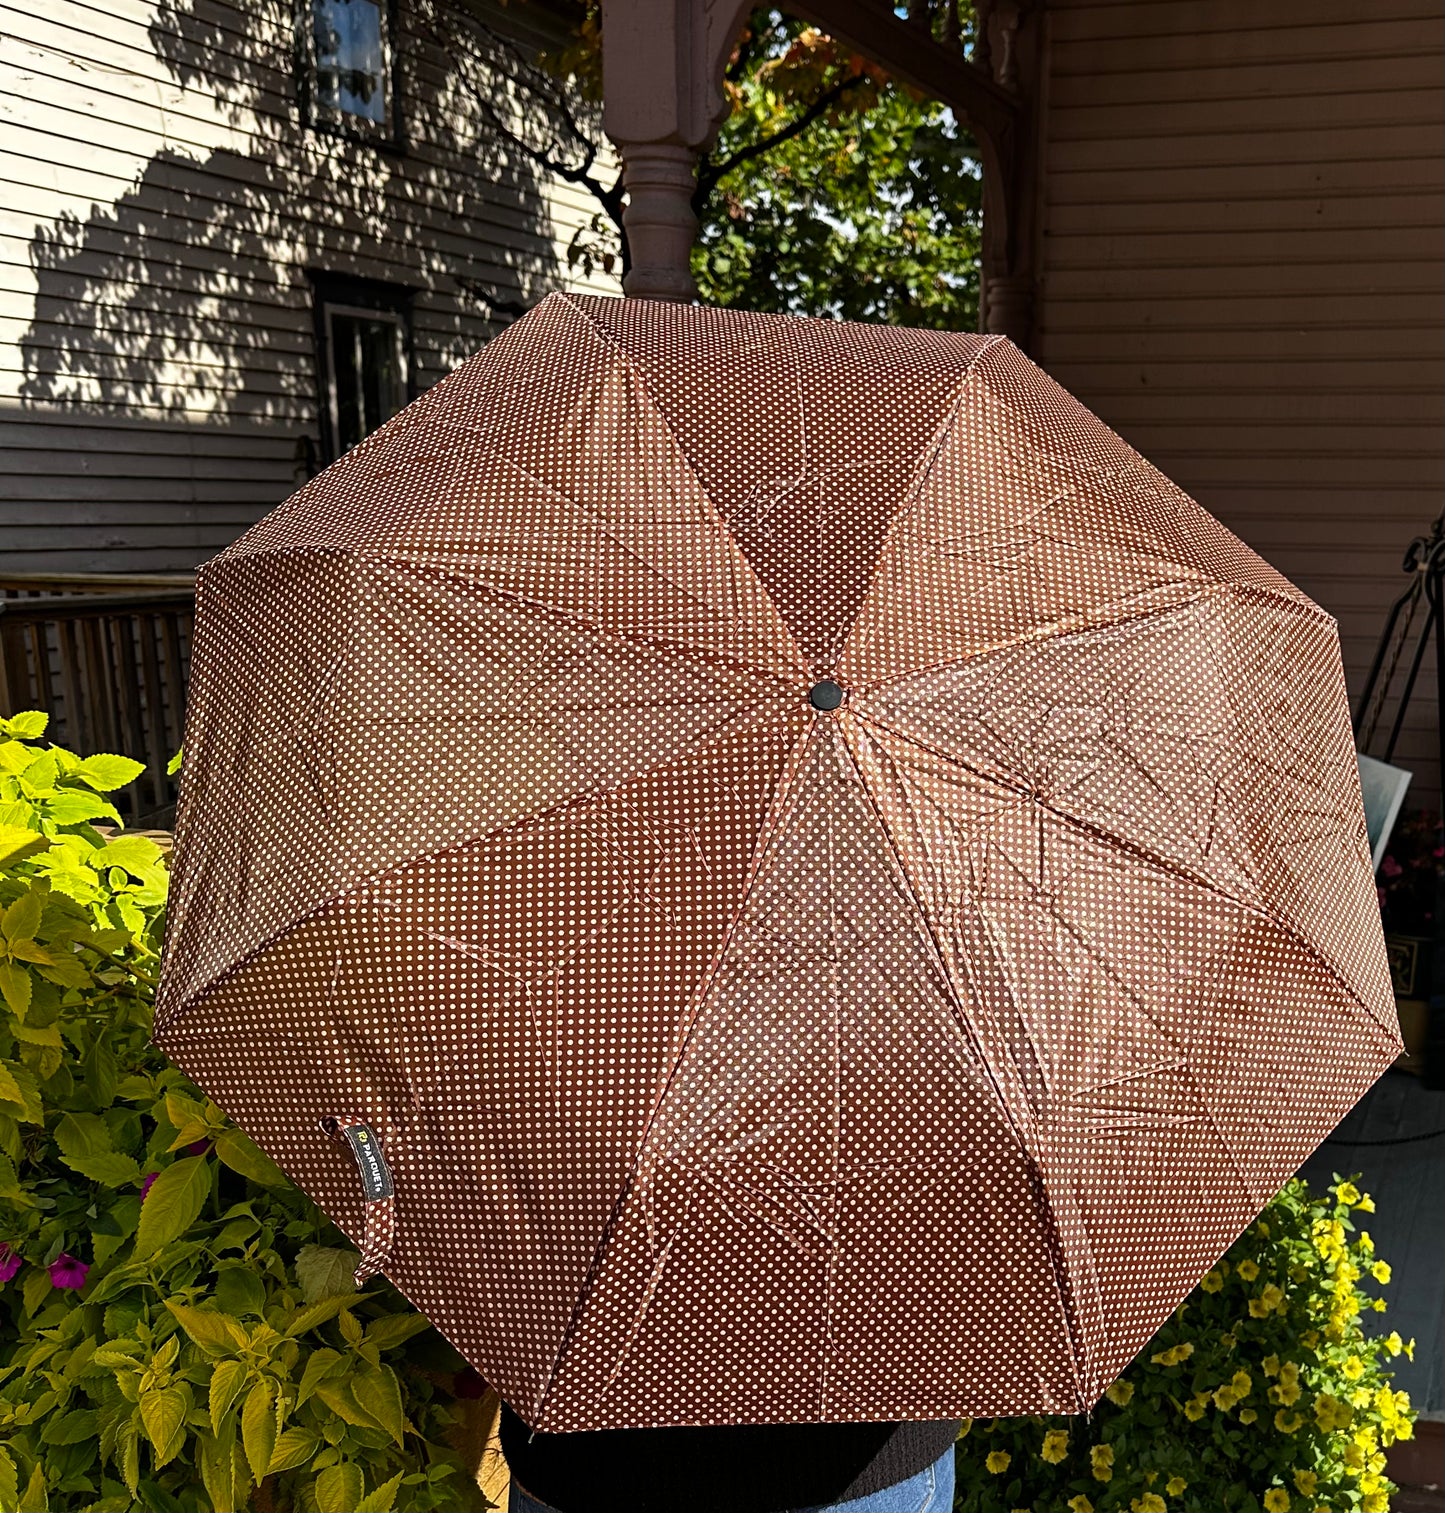 Brown/White PolkaDot Umbrella